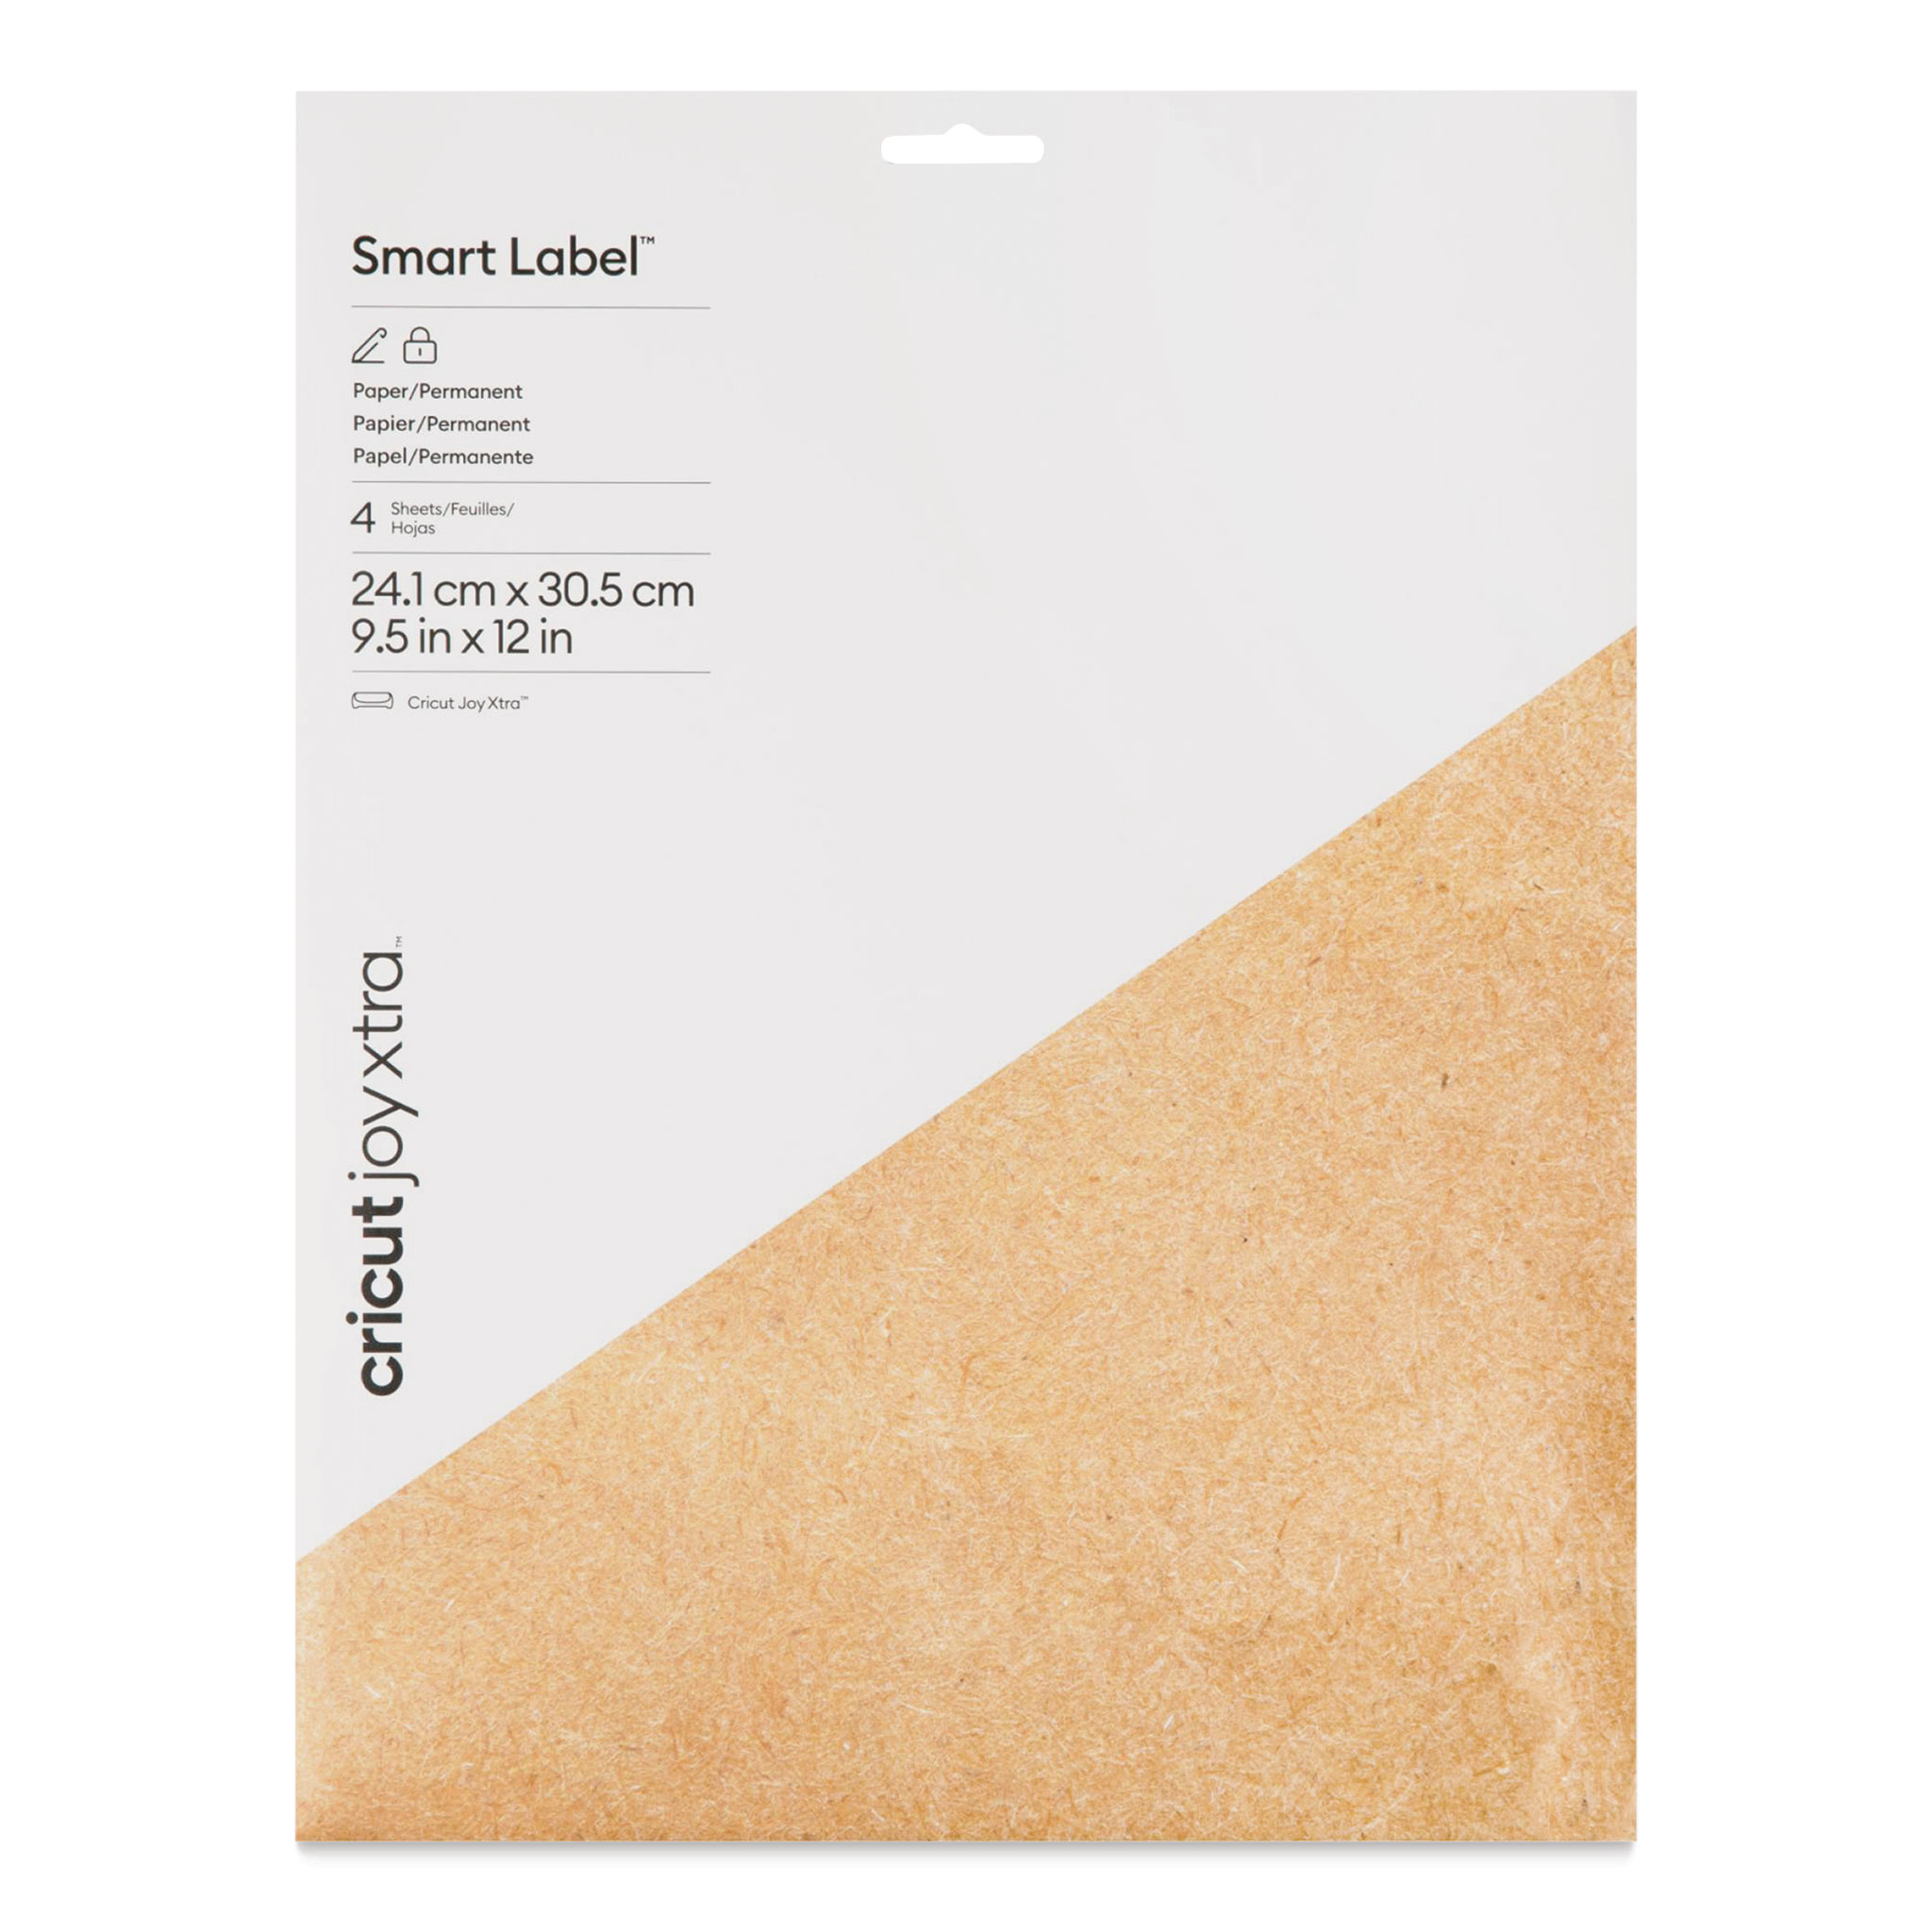 Cricut Joy Xtra Smart Label Paper